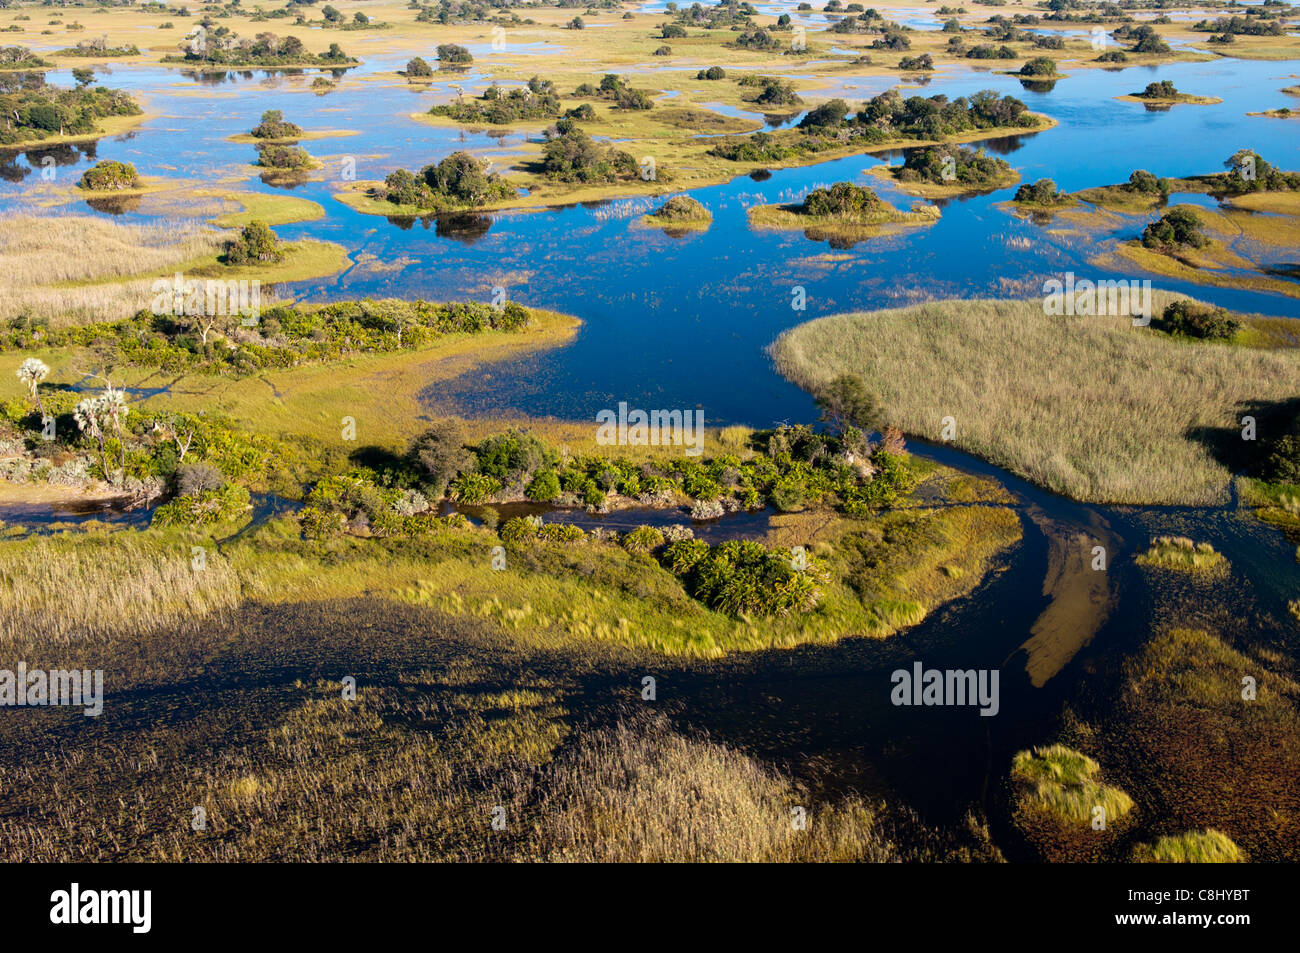 Aerial view of Okavango Delta, Botswana. Stock Photo